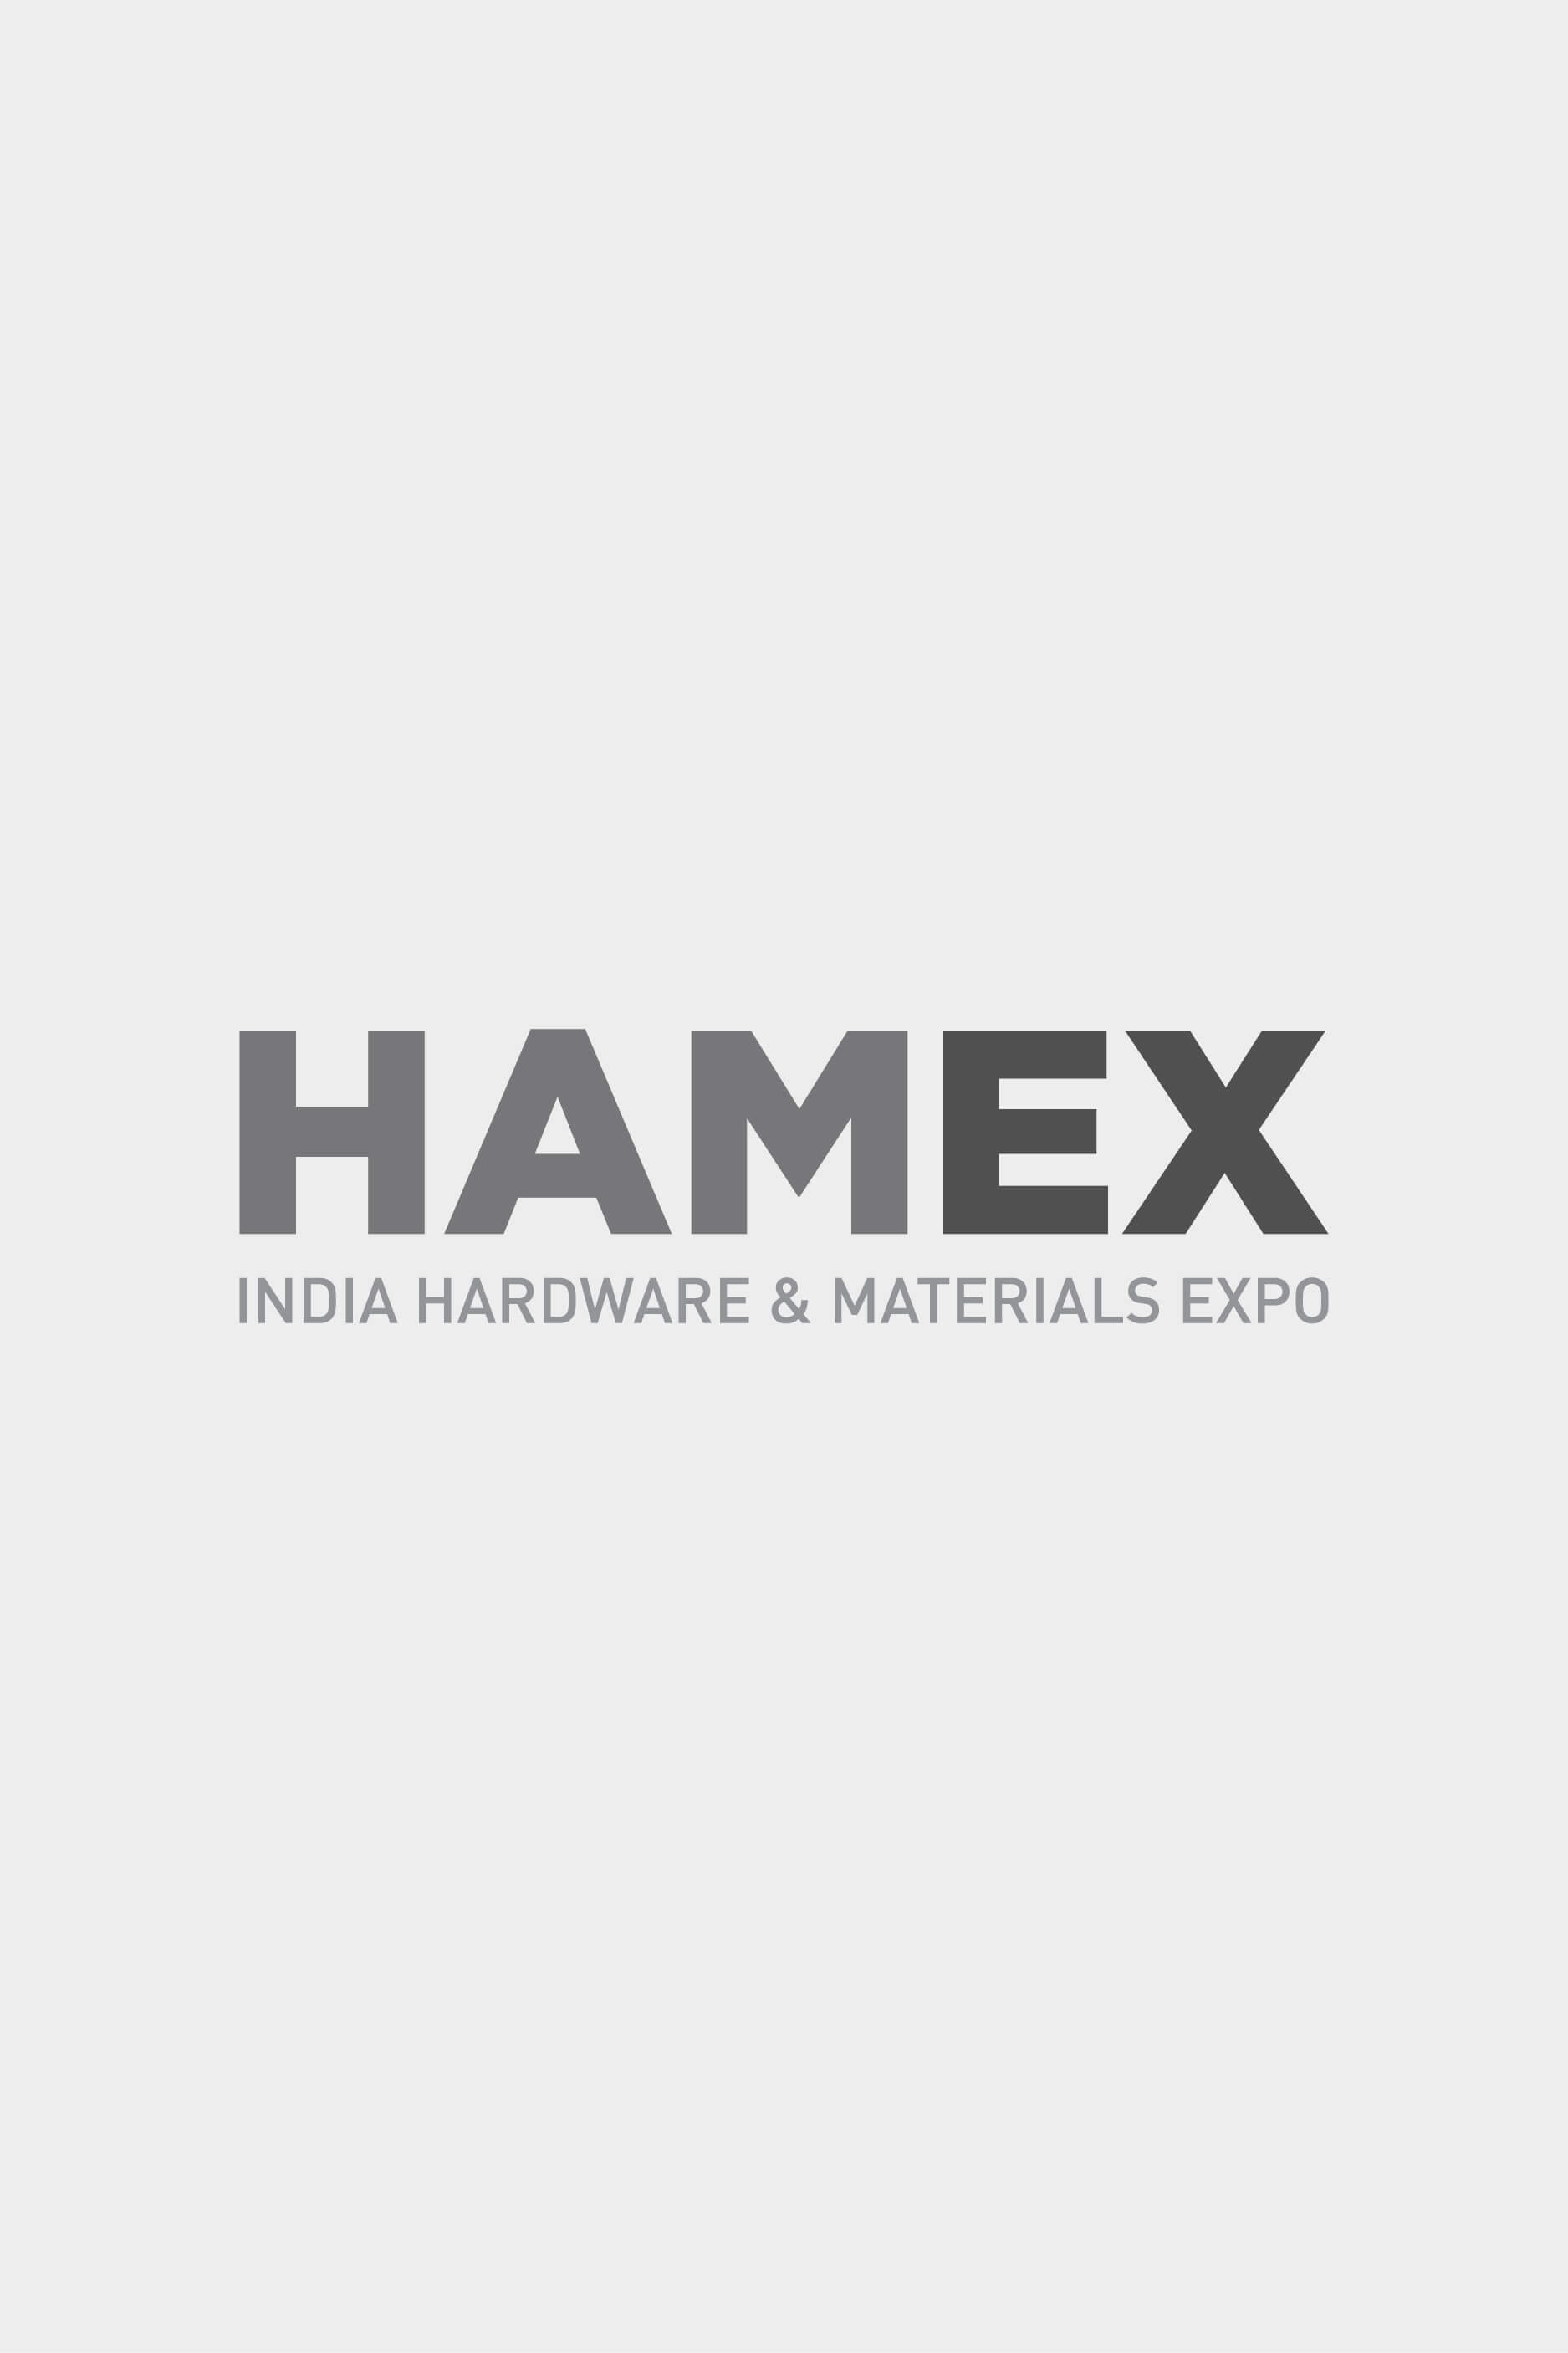 HAMEX - Brand Identity